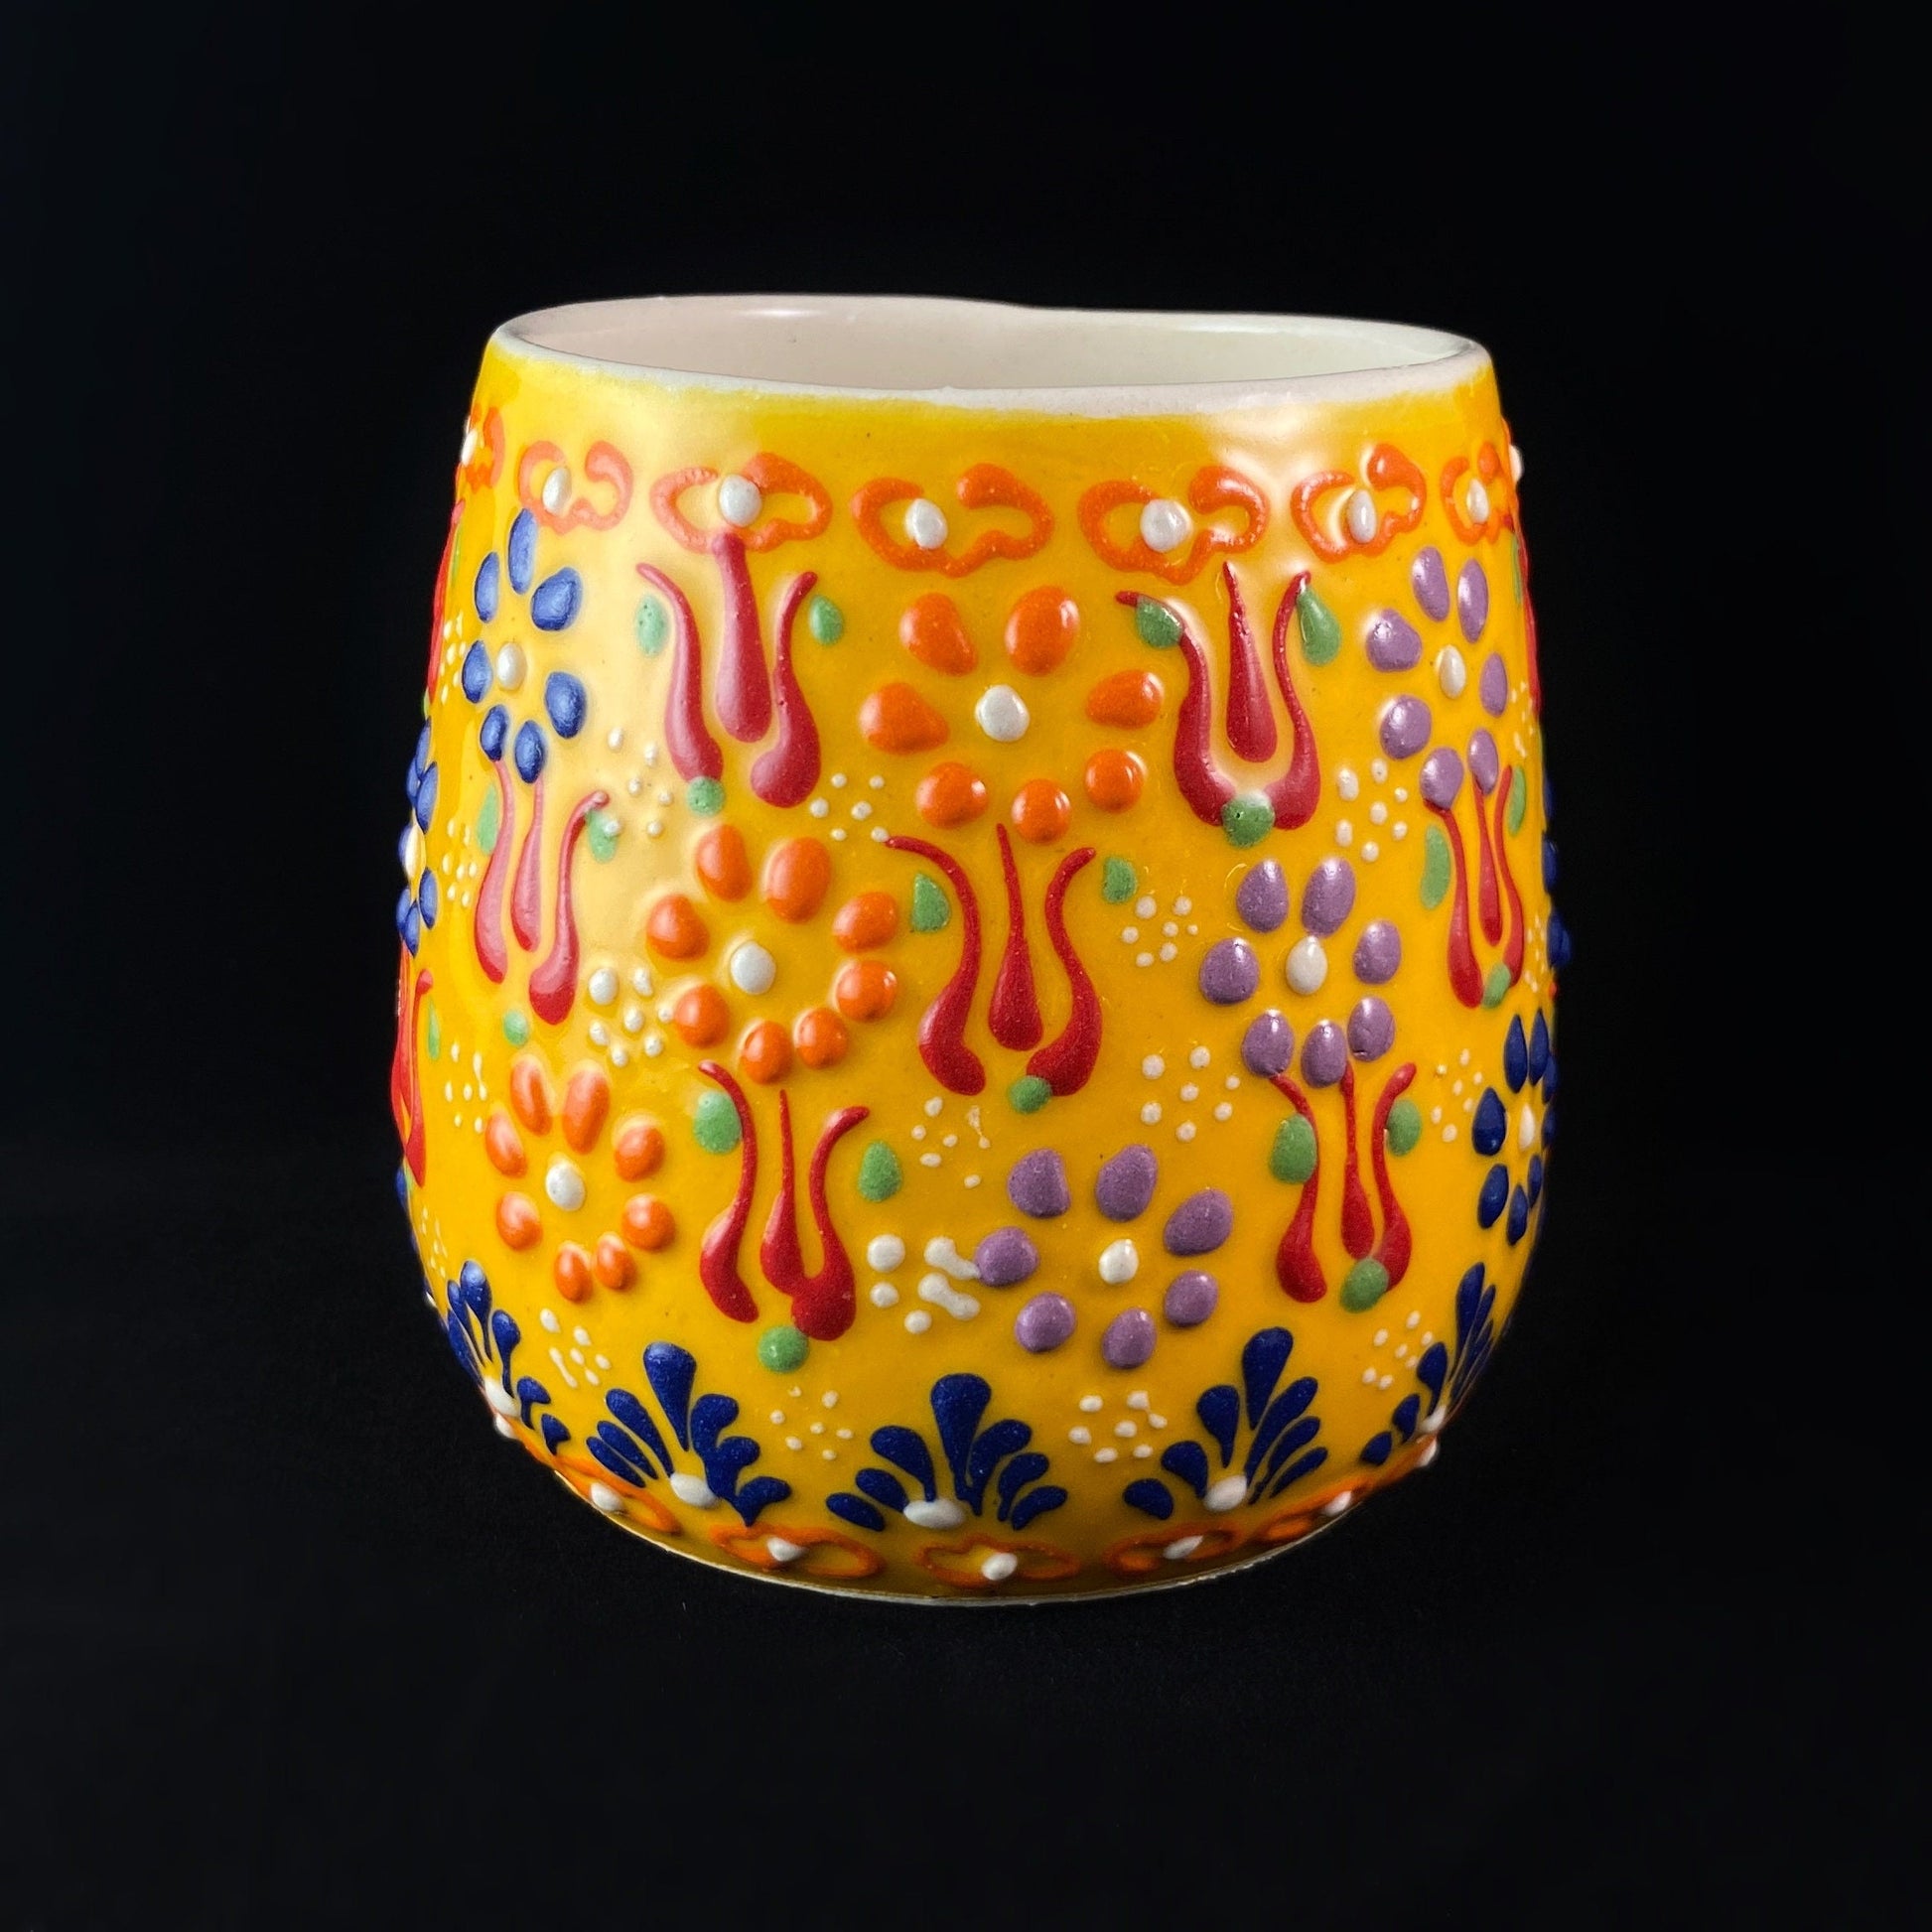 Handmade Mug, Functional and Decorative Turkish Pottery, Cottagecore Style, Yellow